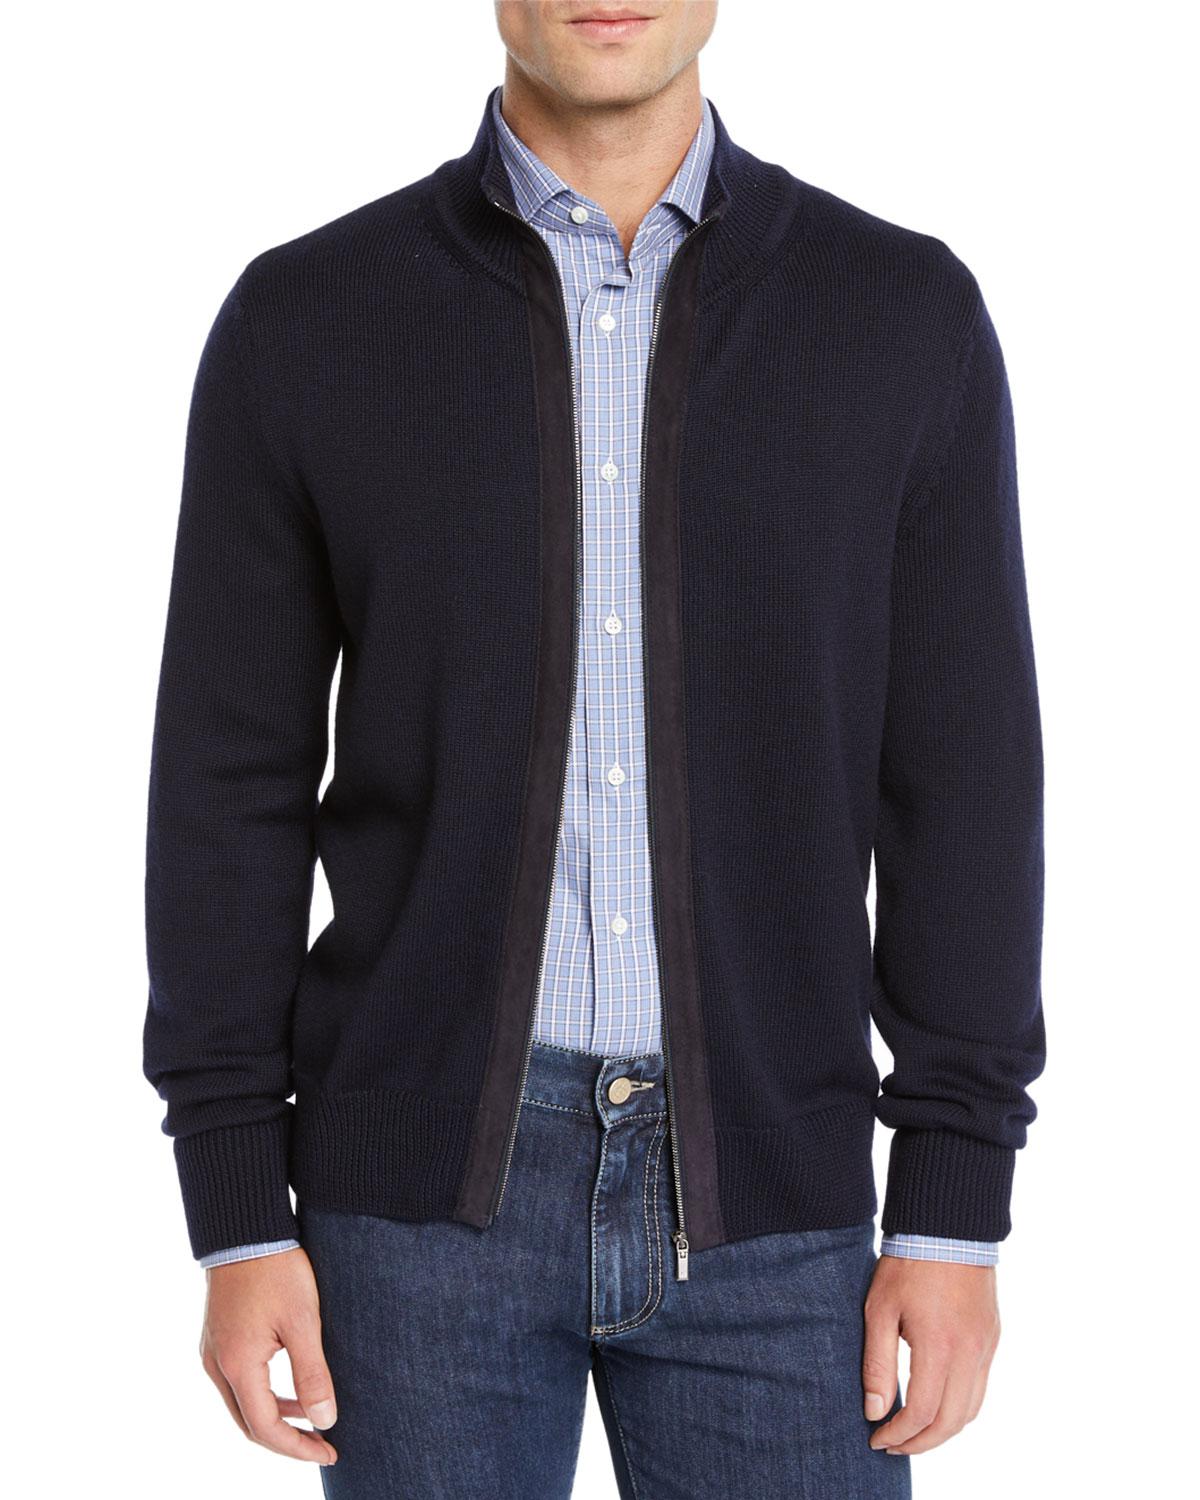 Canali Men's Suede-trim Wool Zip-front Jacket in Navy (Blue) for Men - Lyst